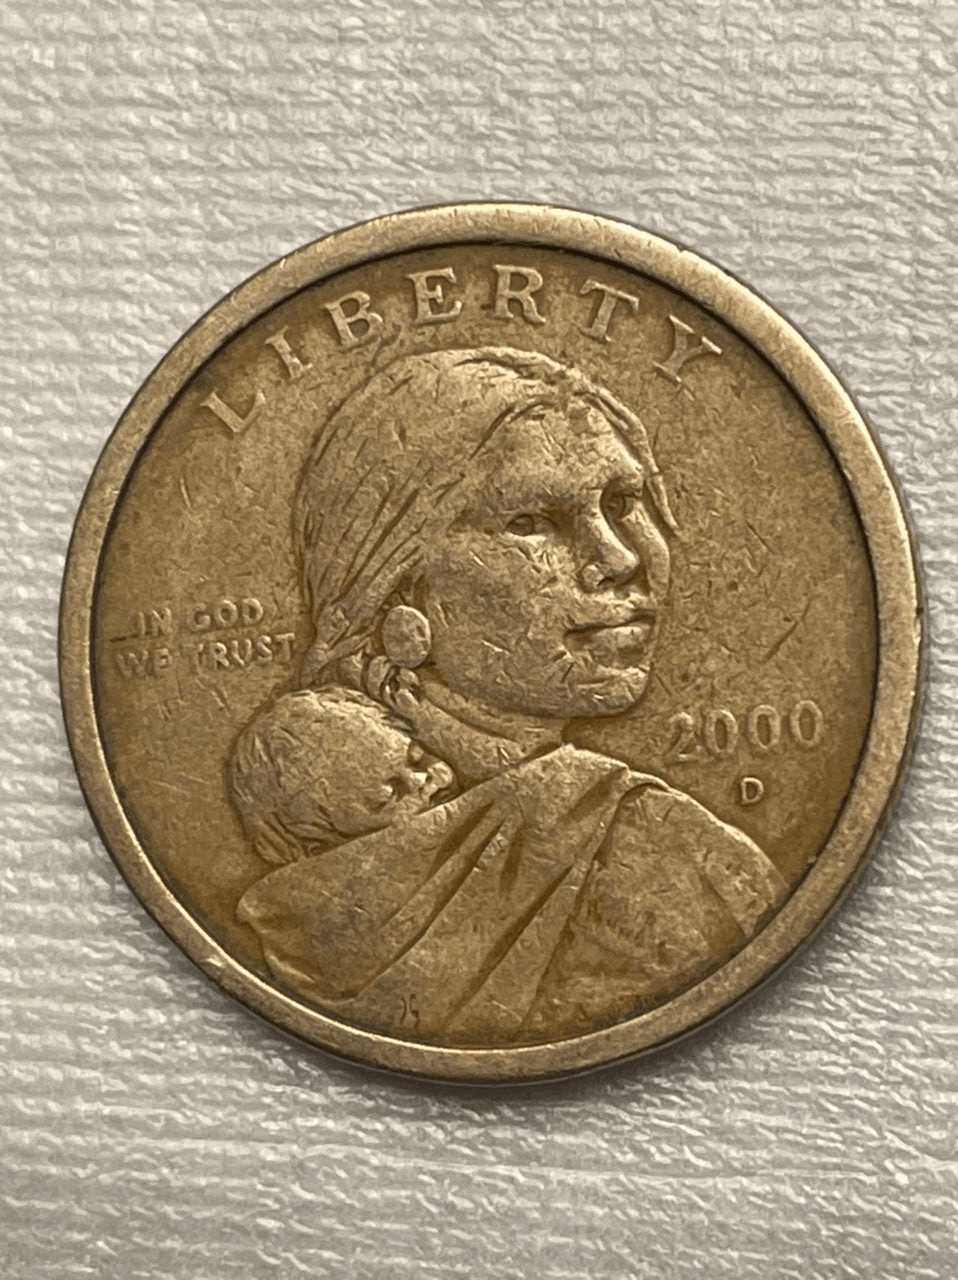 US 2000 D Sacagawea Dollar Coin